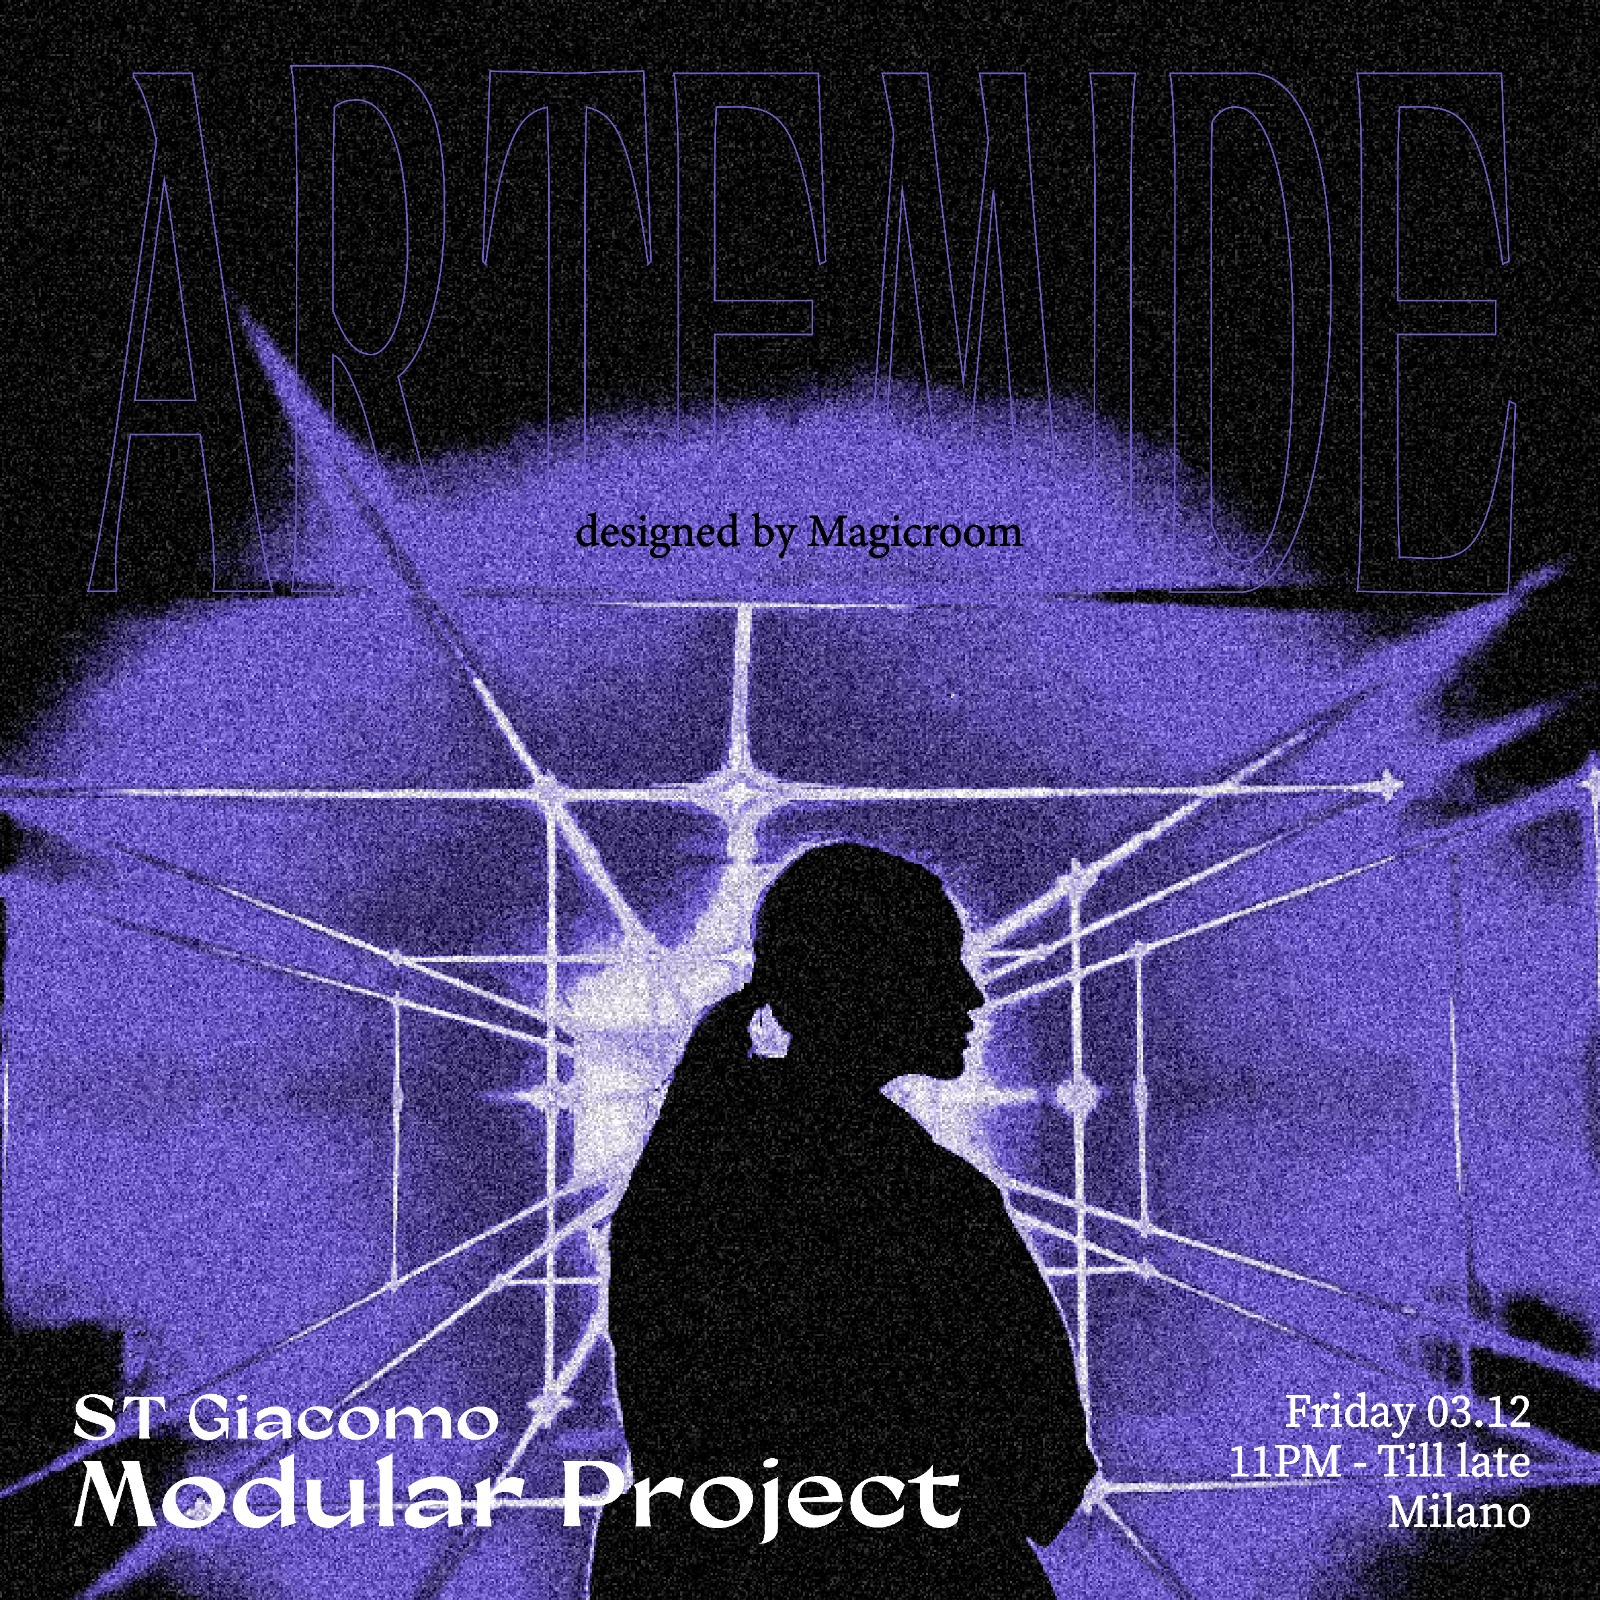 ARTEMIDE 3.12 w/Modular Project/StGiacomo Designed by MagicRoom